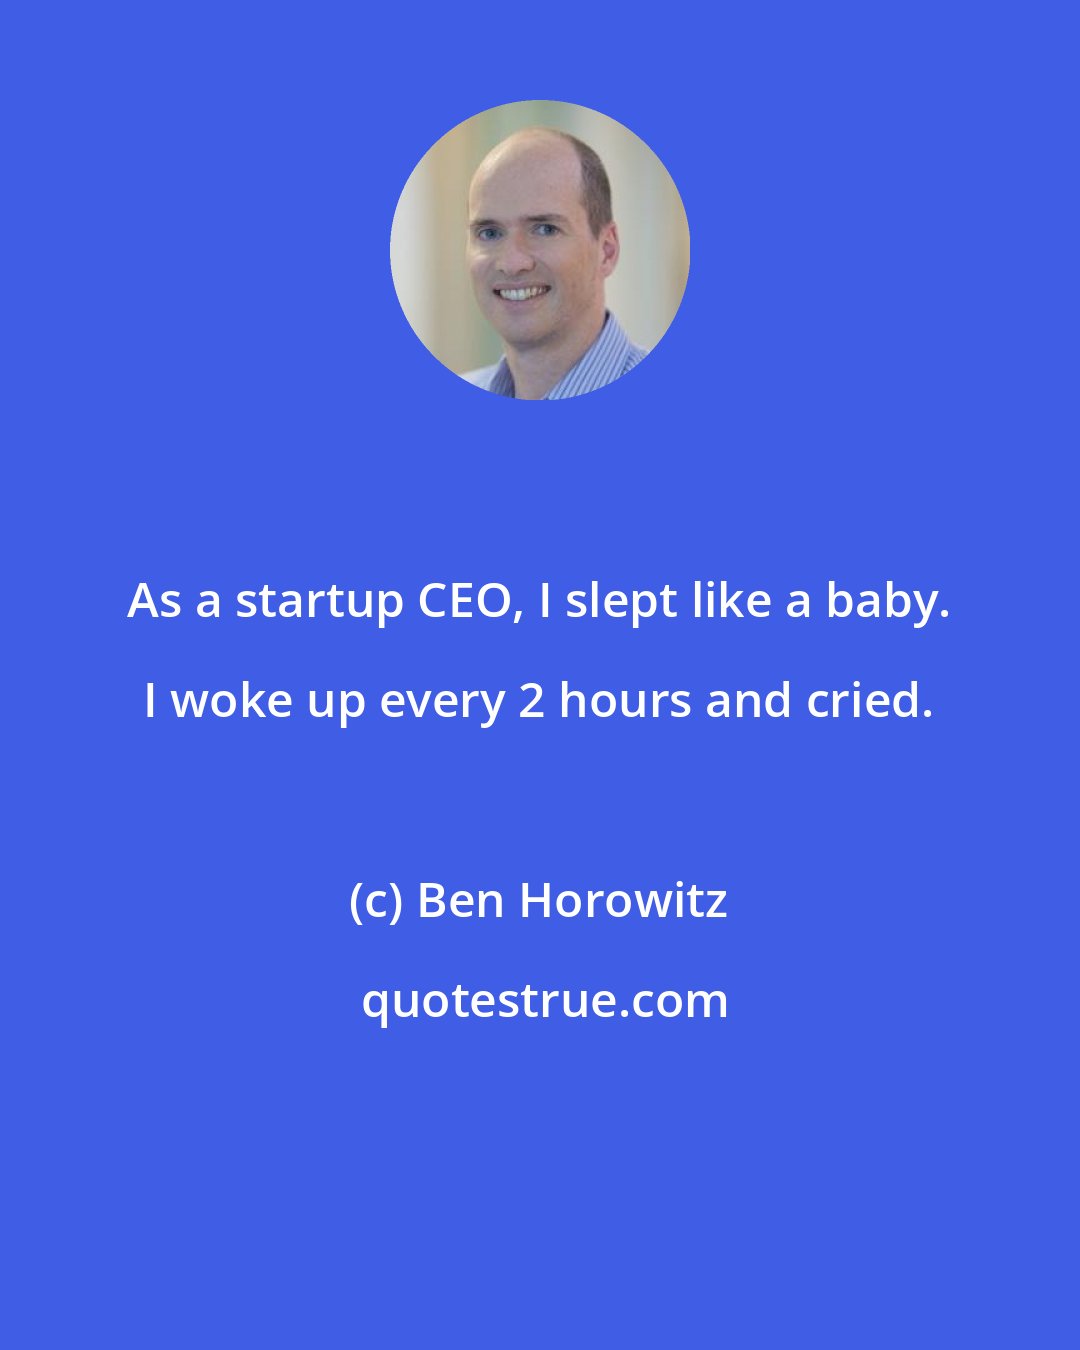 Ben Horowitz: As a startup CEO, I slept like a baby. I woke up every 2 hours and cried.